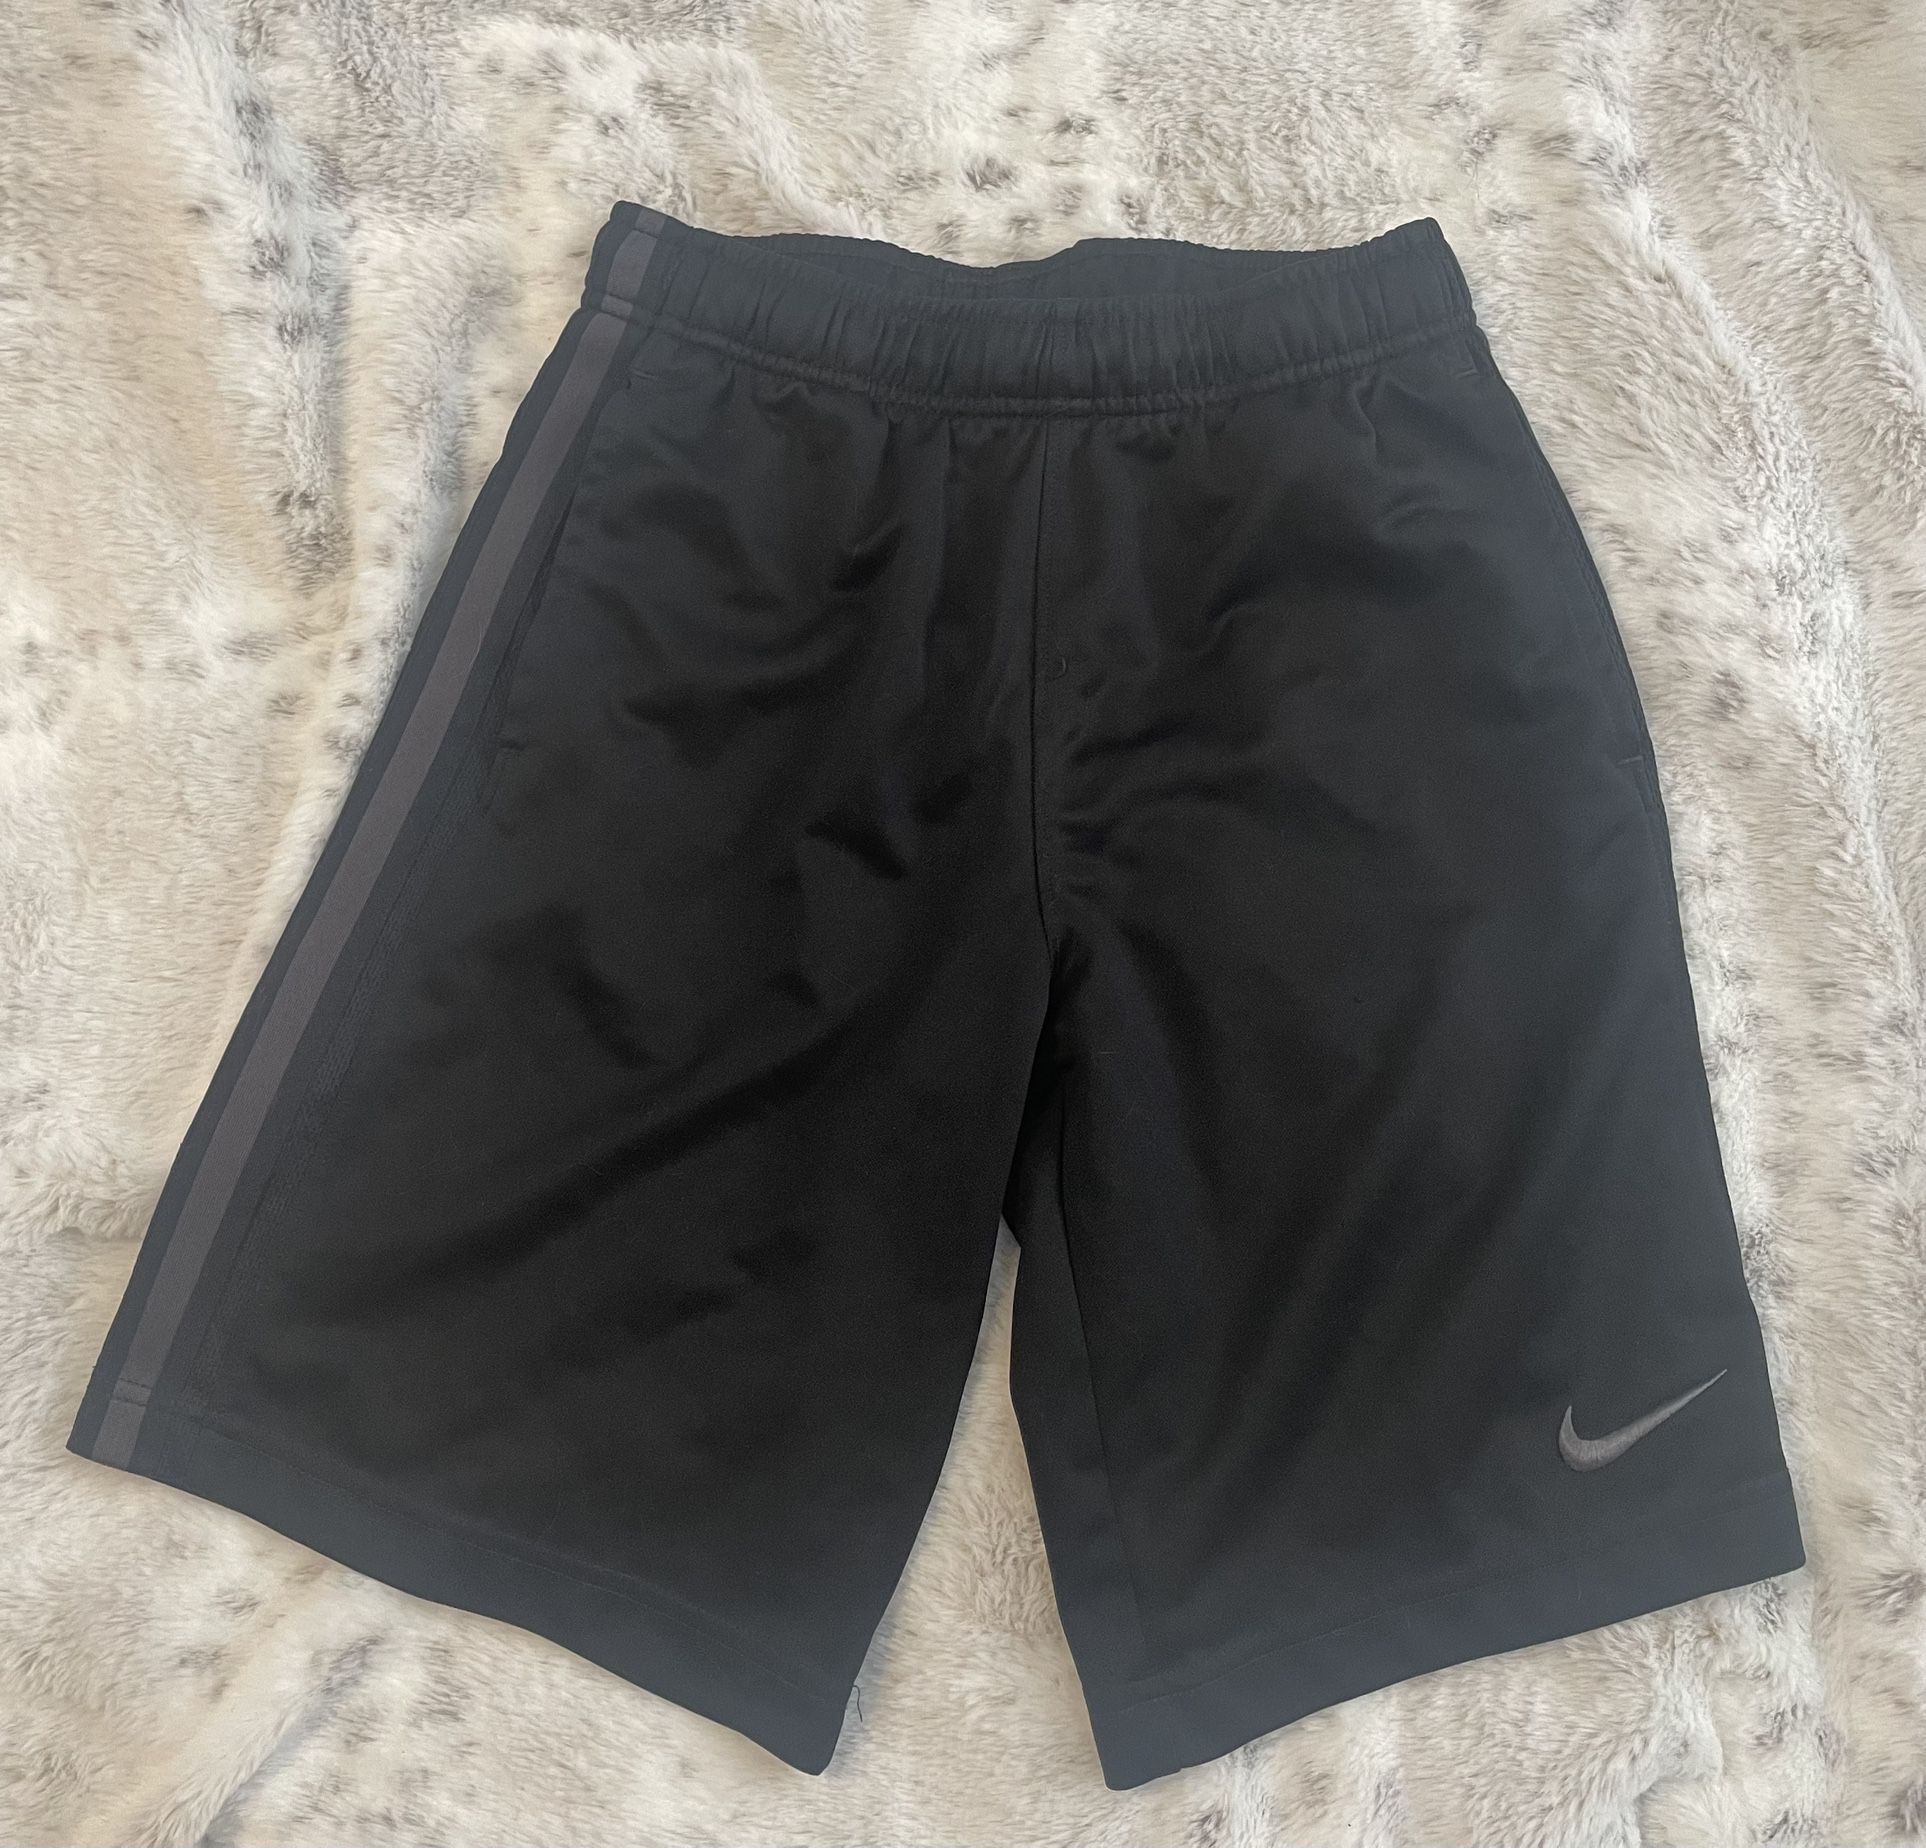 Boys Medium Black Nike Shorts